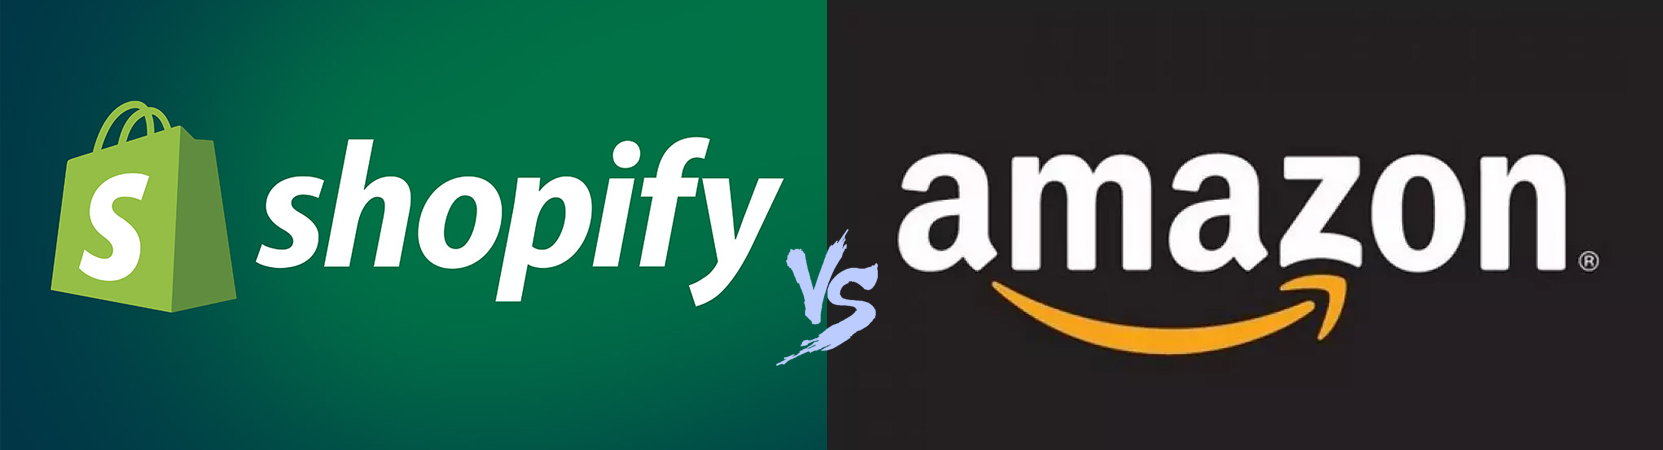 shopify-vs-amazon.jpg